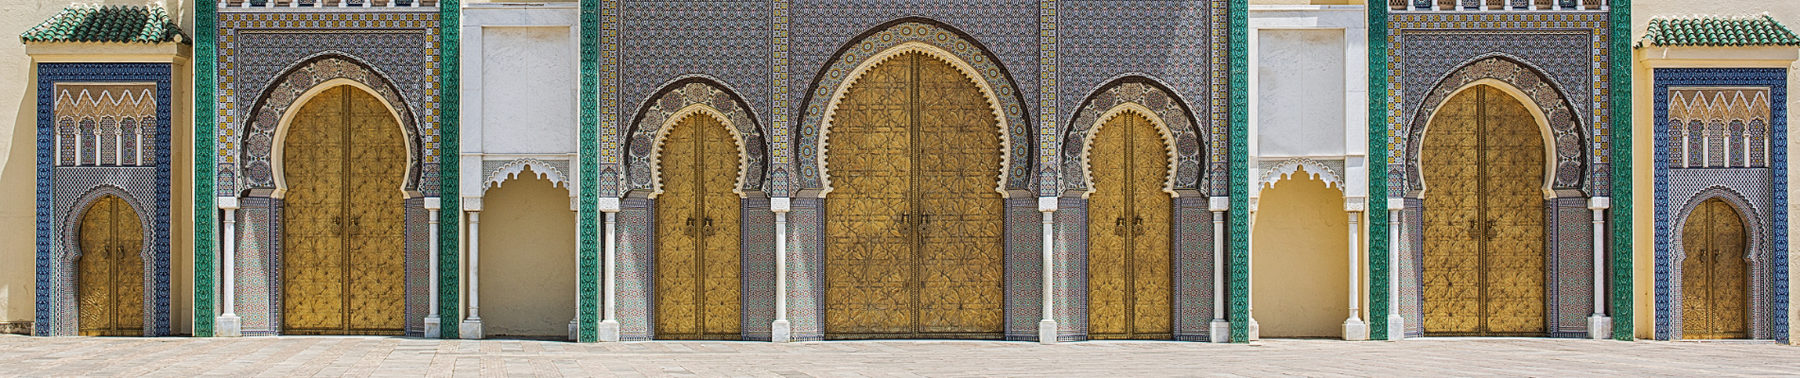 Medinas of Morocco